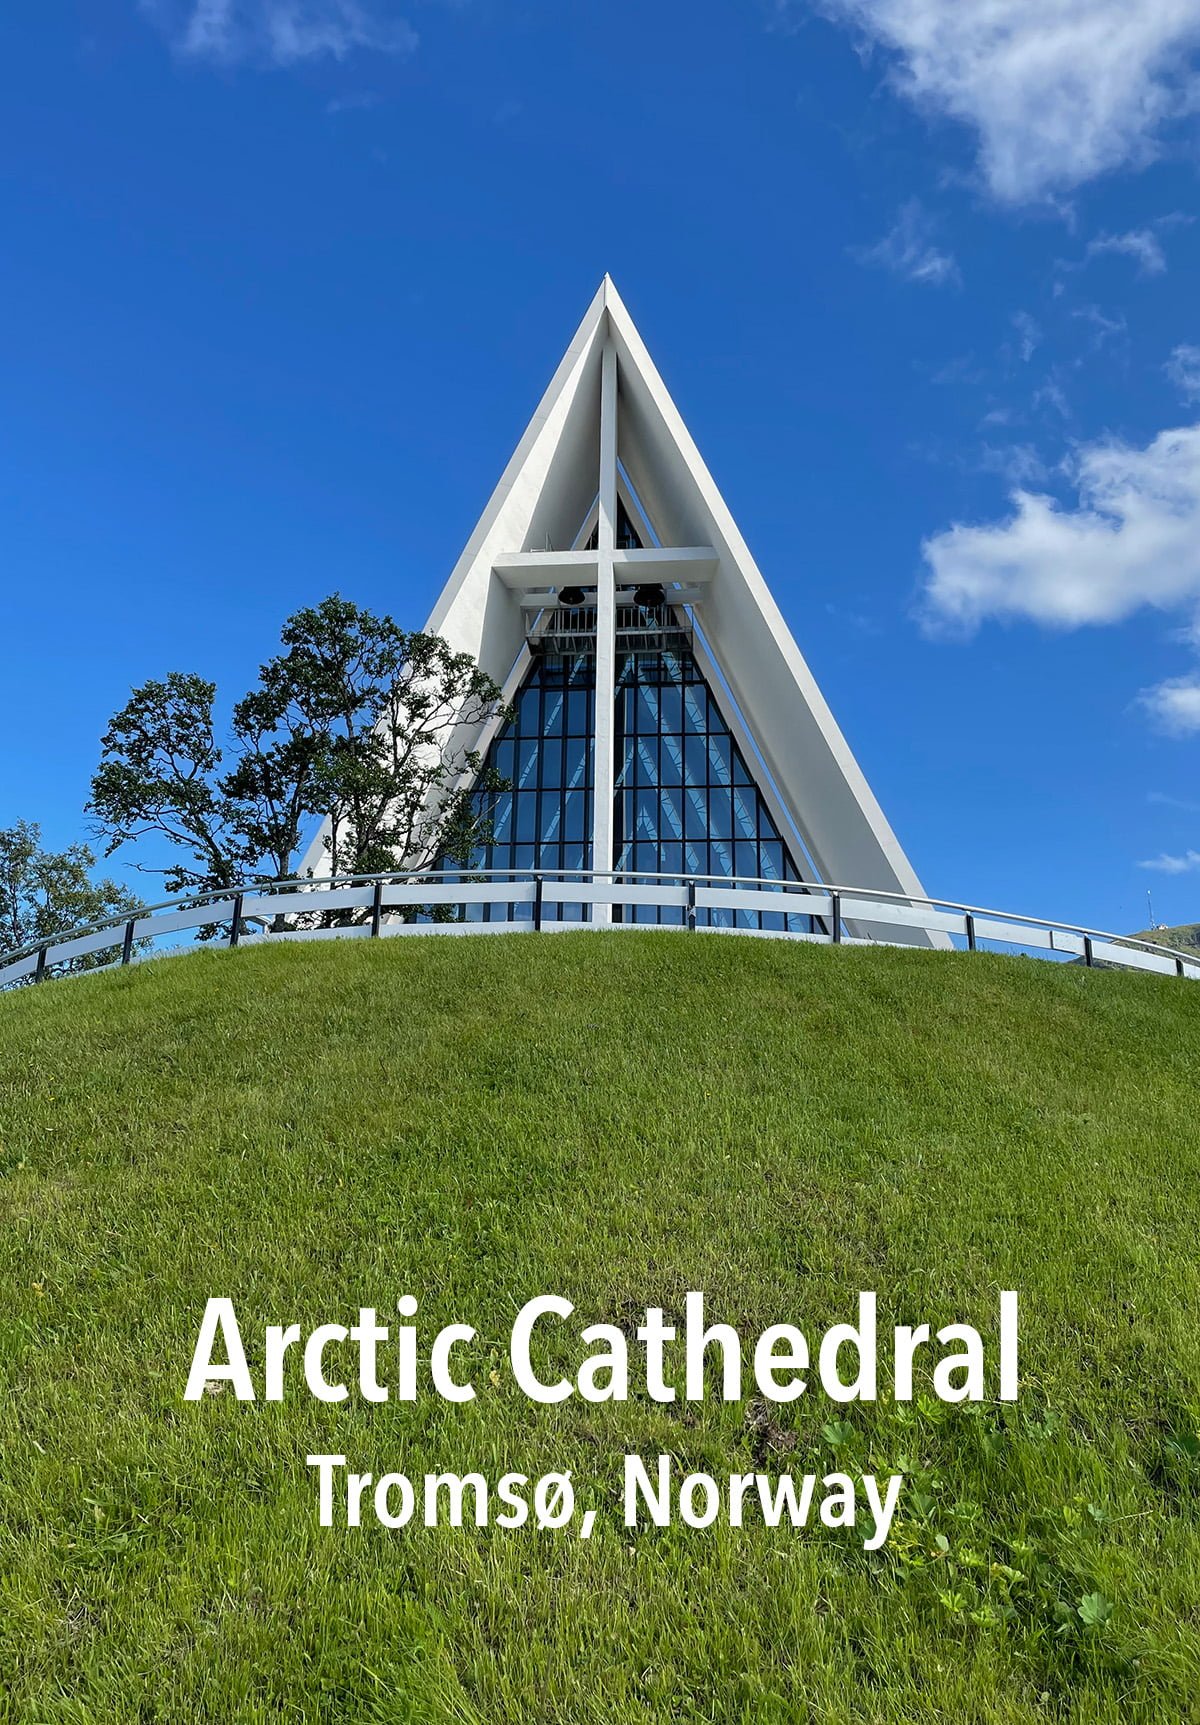 The striking Arctic Cathedral in Tromsø, Norway